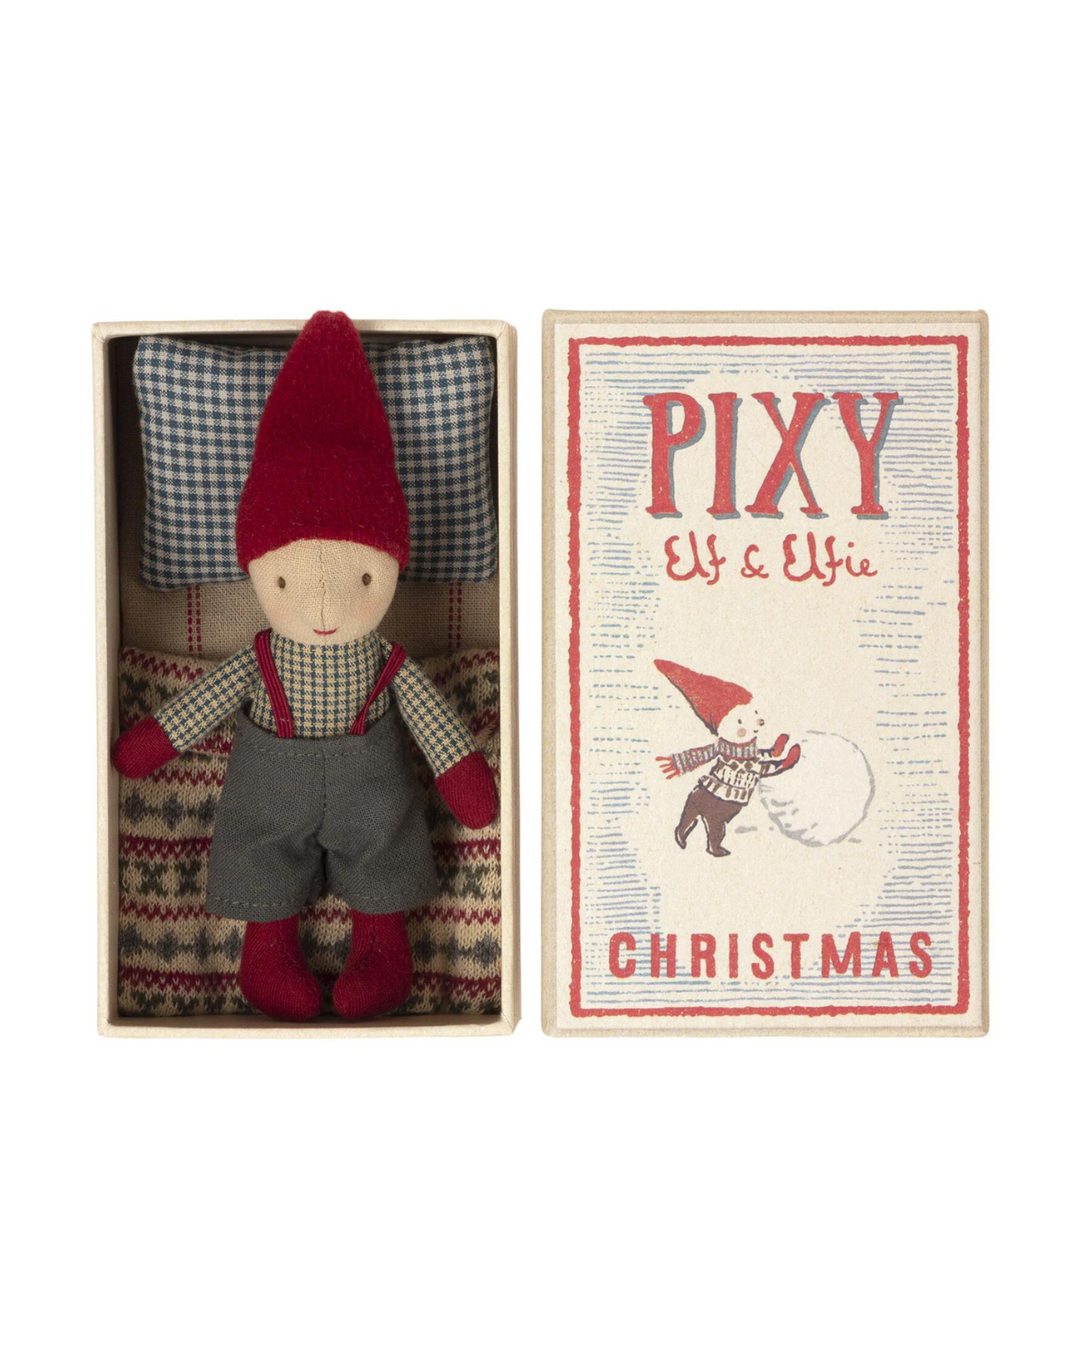 Maileg Christmas Pixy Elf in Matchbox - Holiday Dollhouse Decor